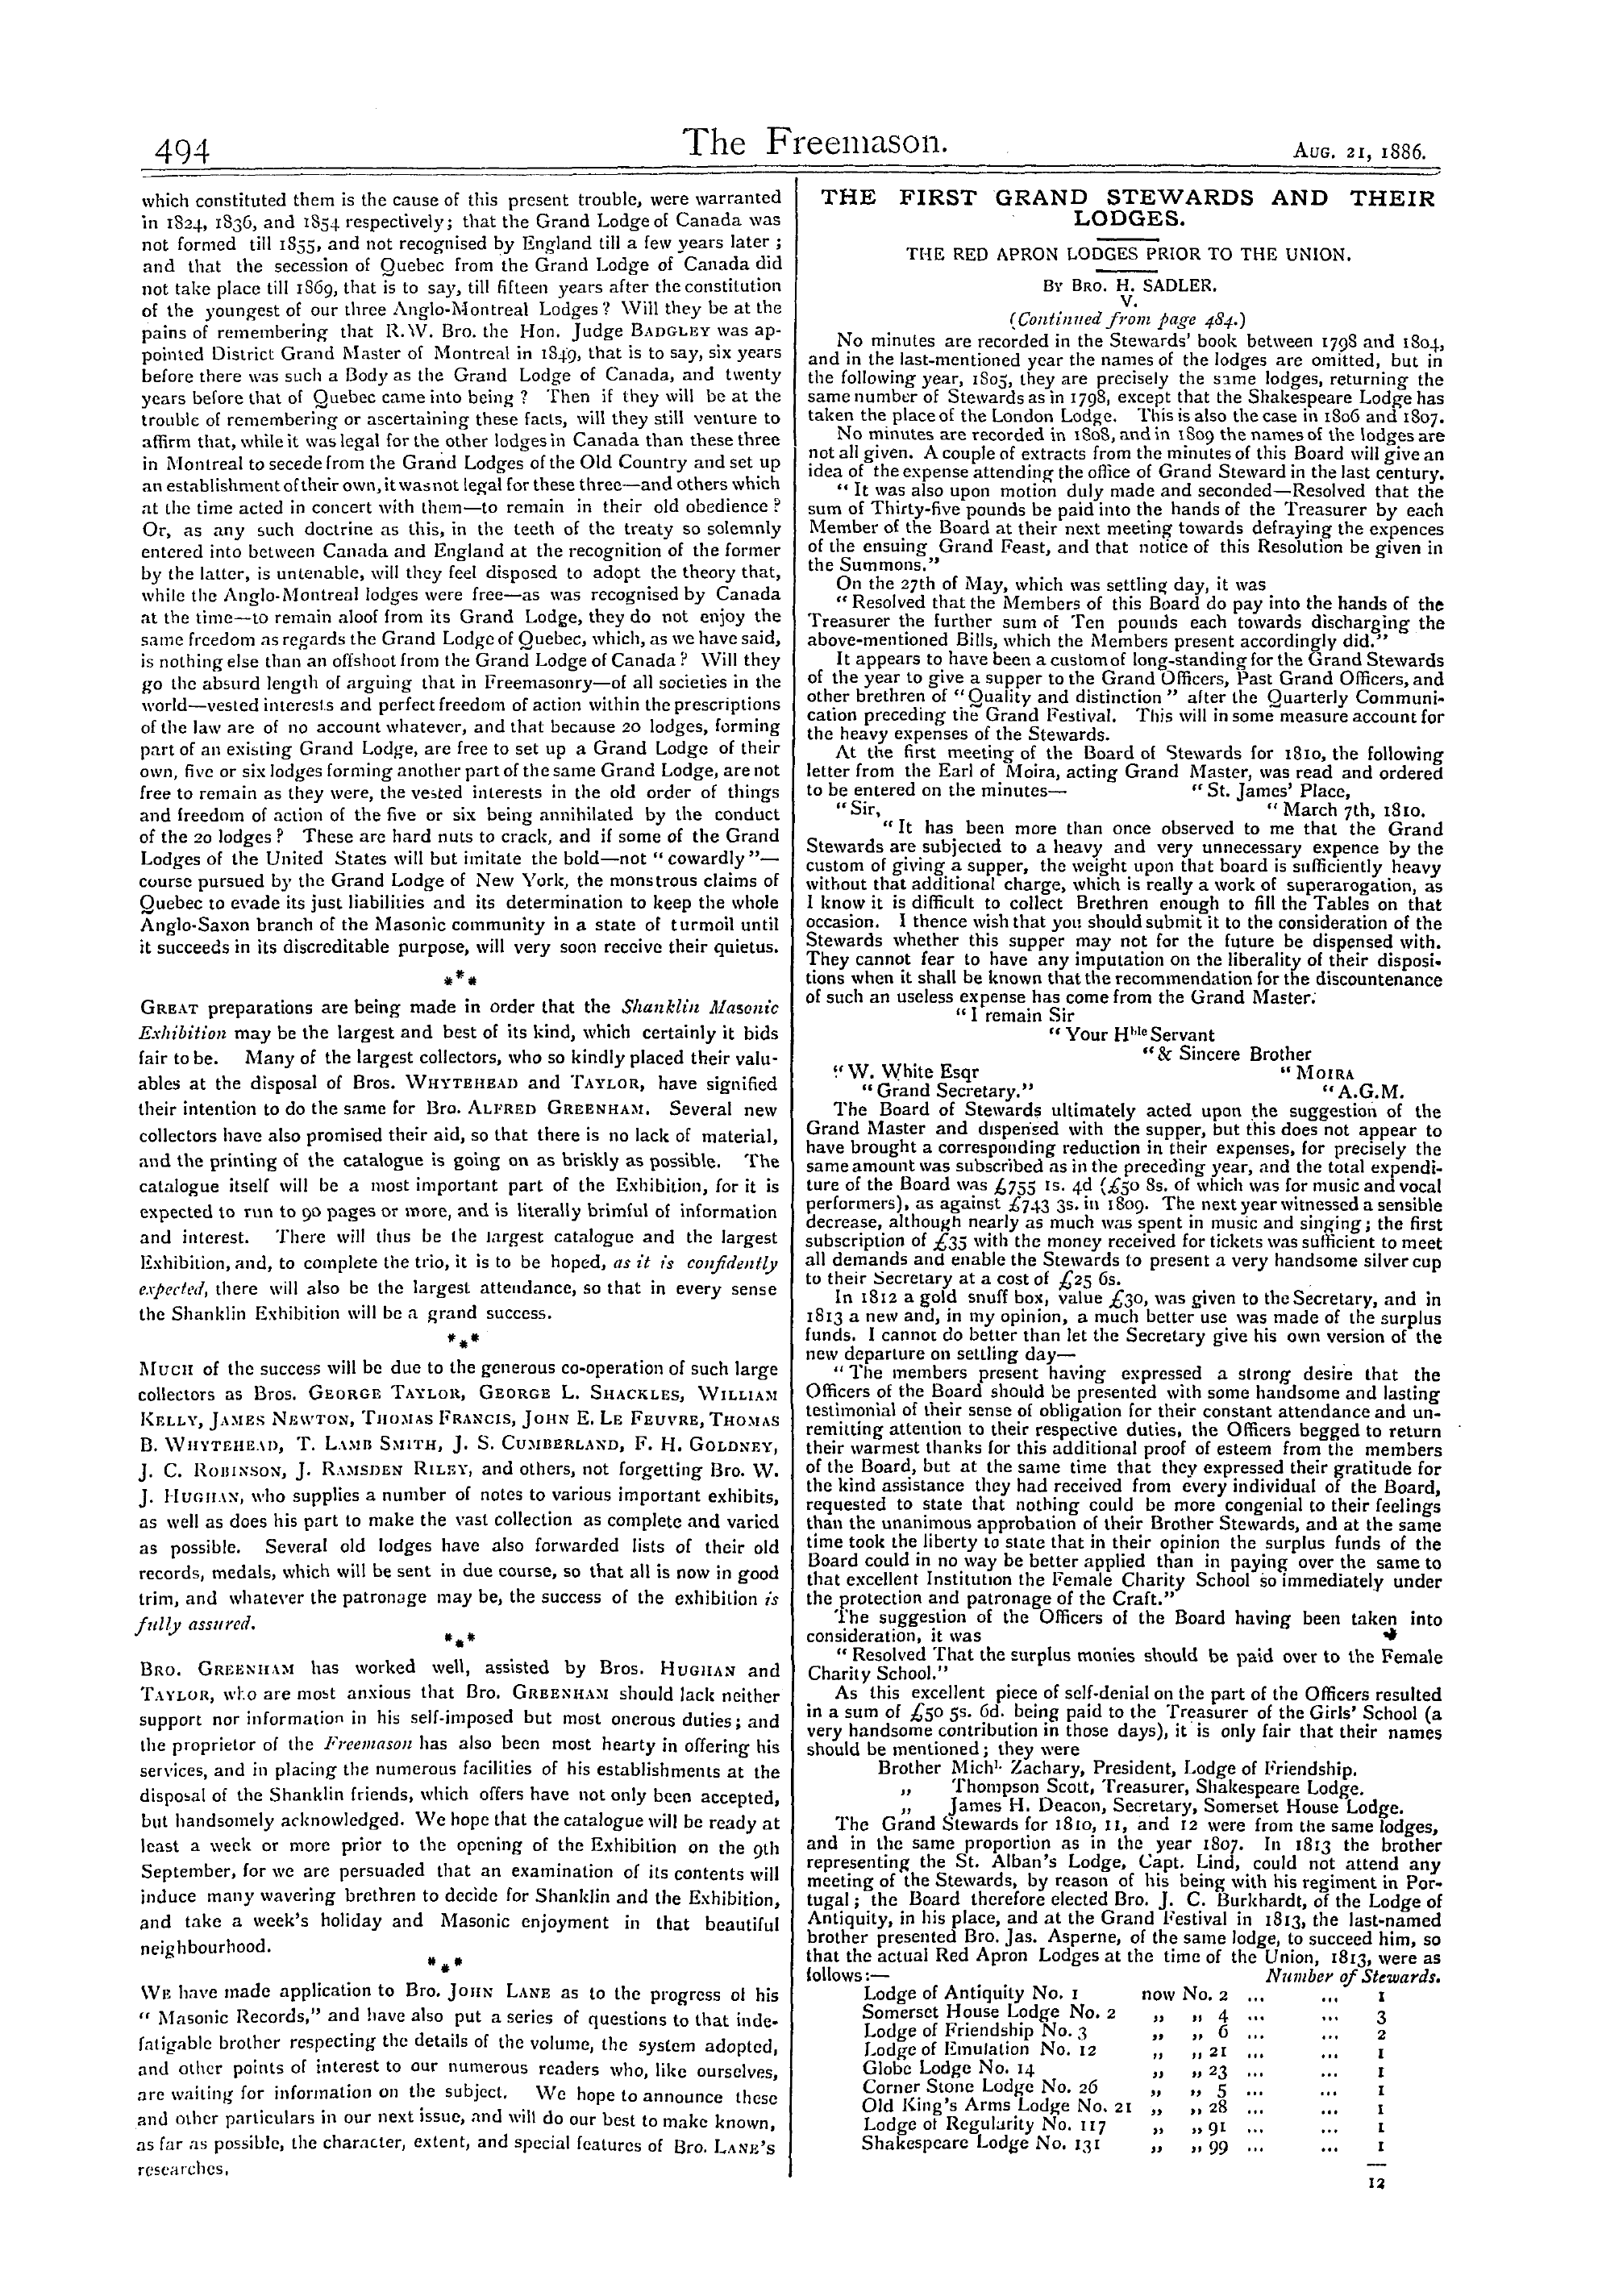 The Freemason: 1886-08-21: 2